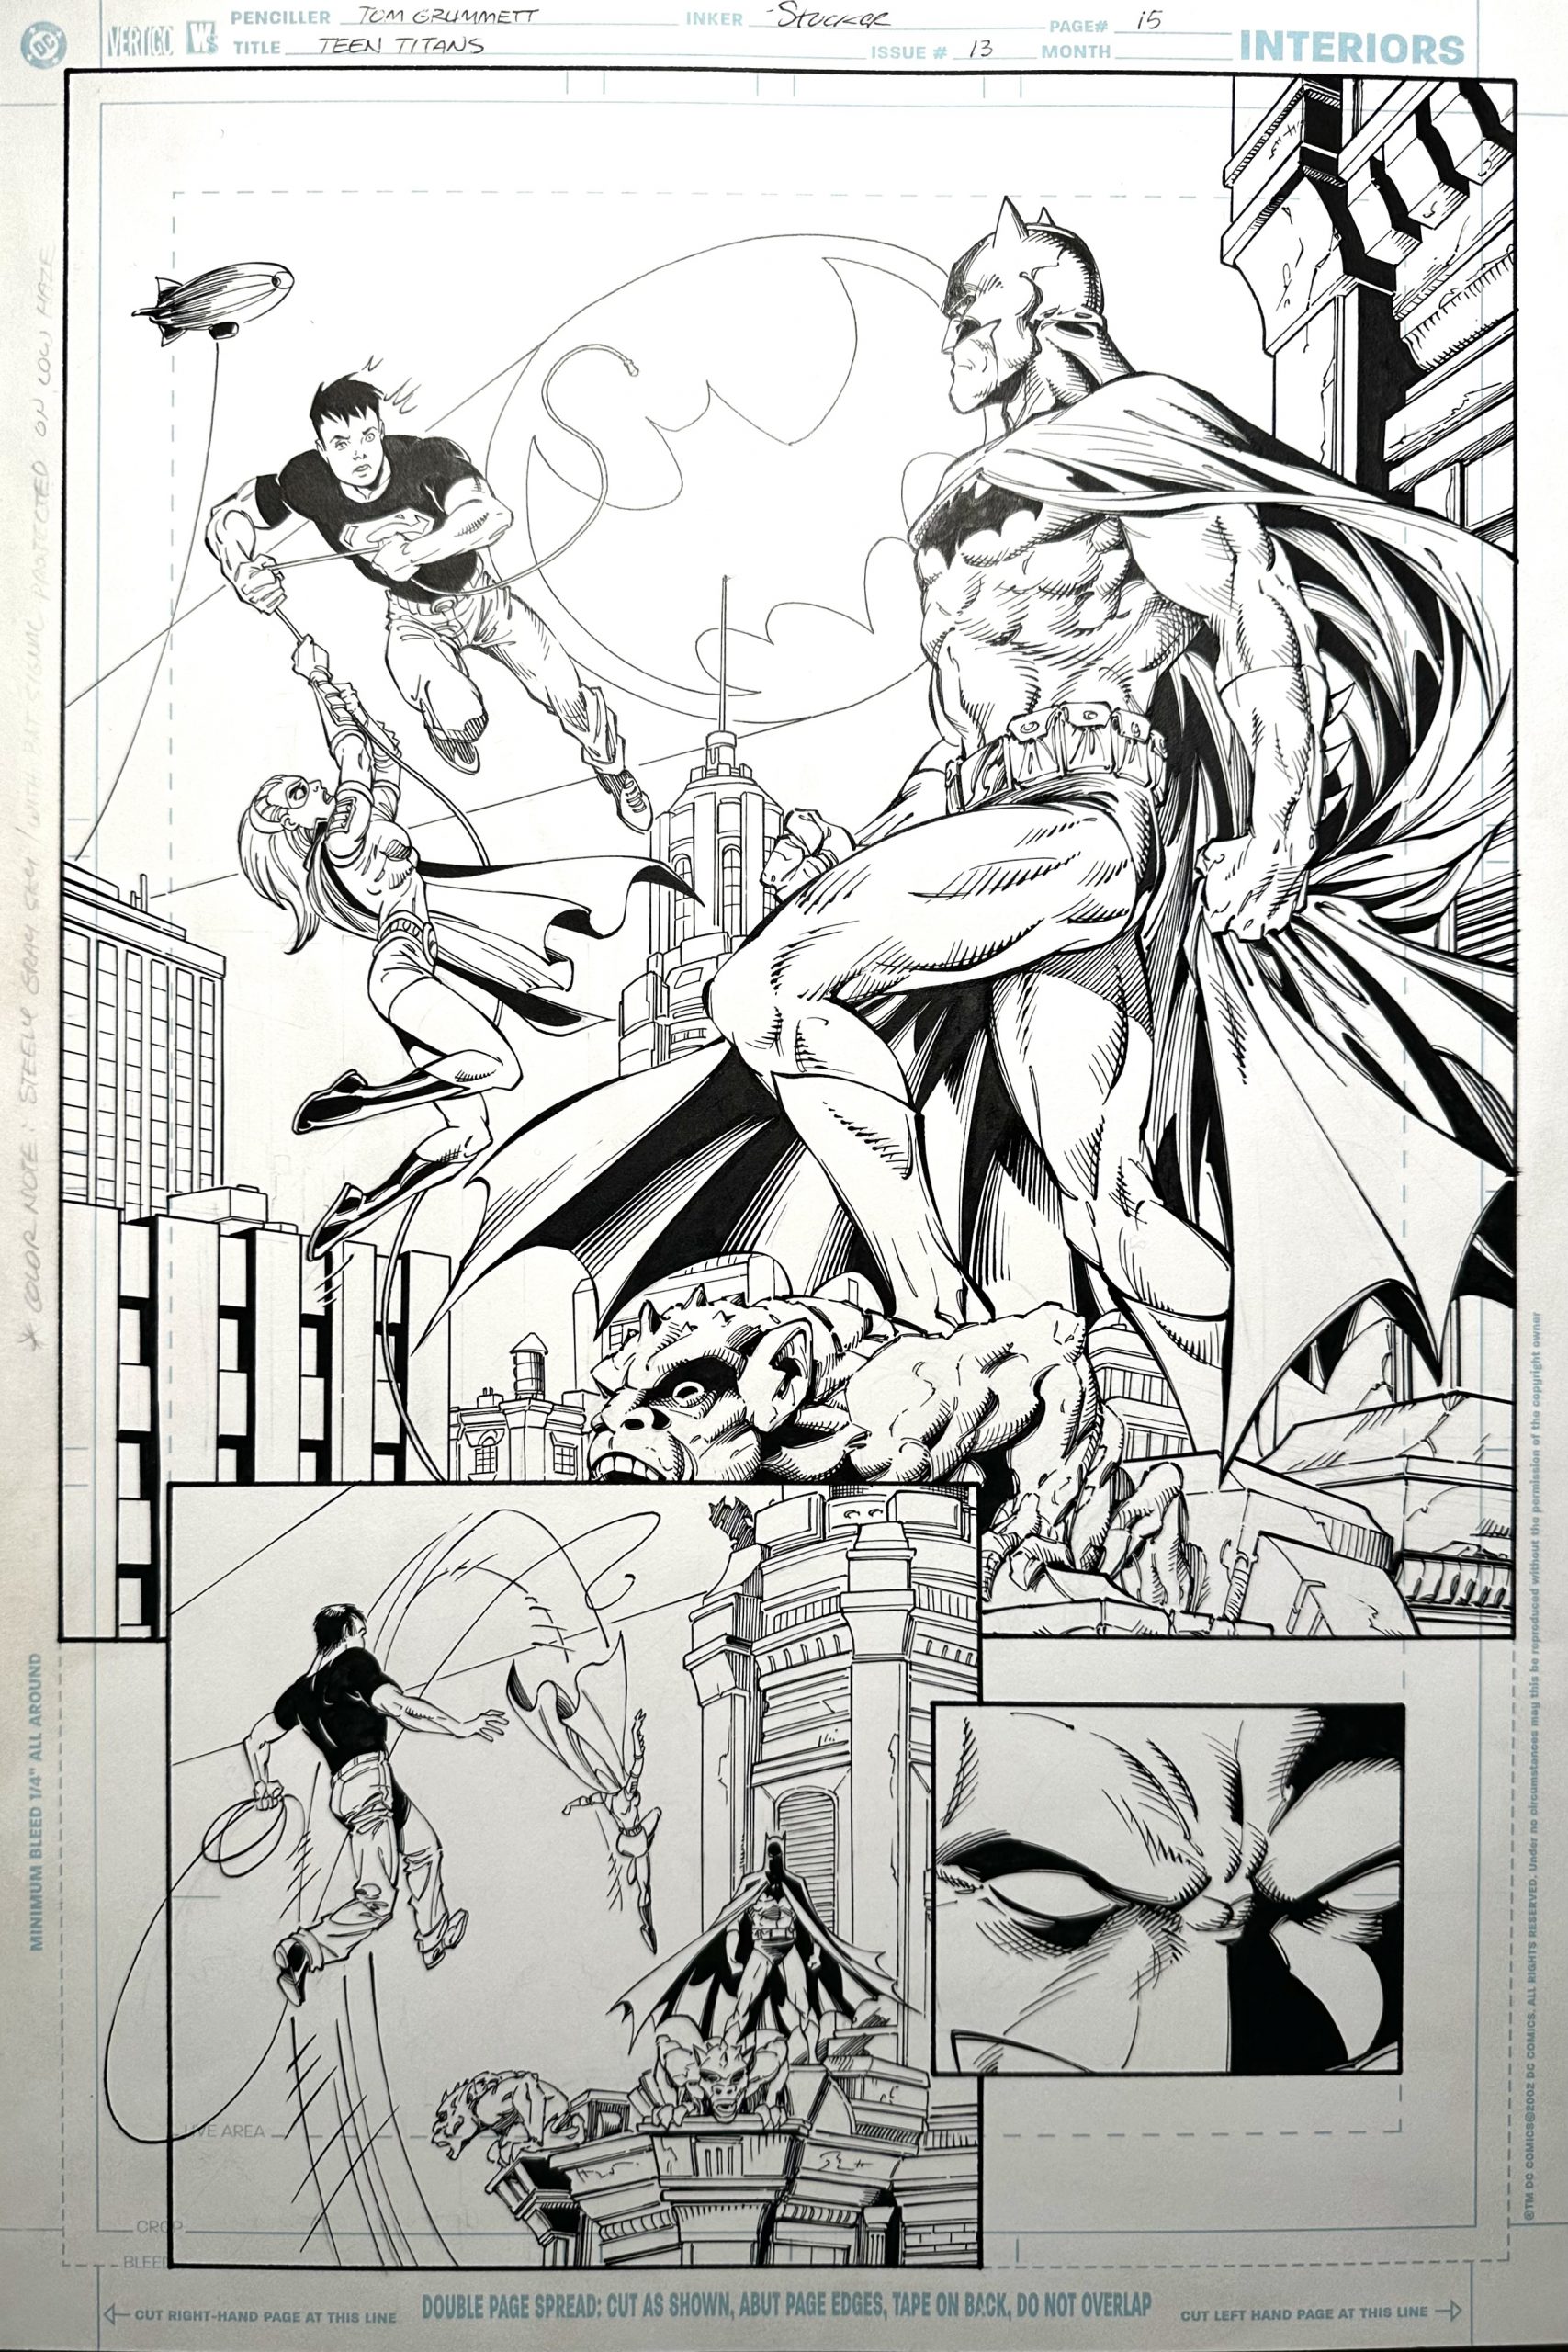 Original Artwork for Teen Titans #13 page 15 by Tom Grummet & Lary Stucker